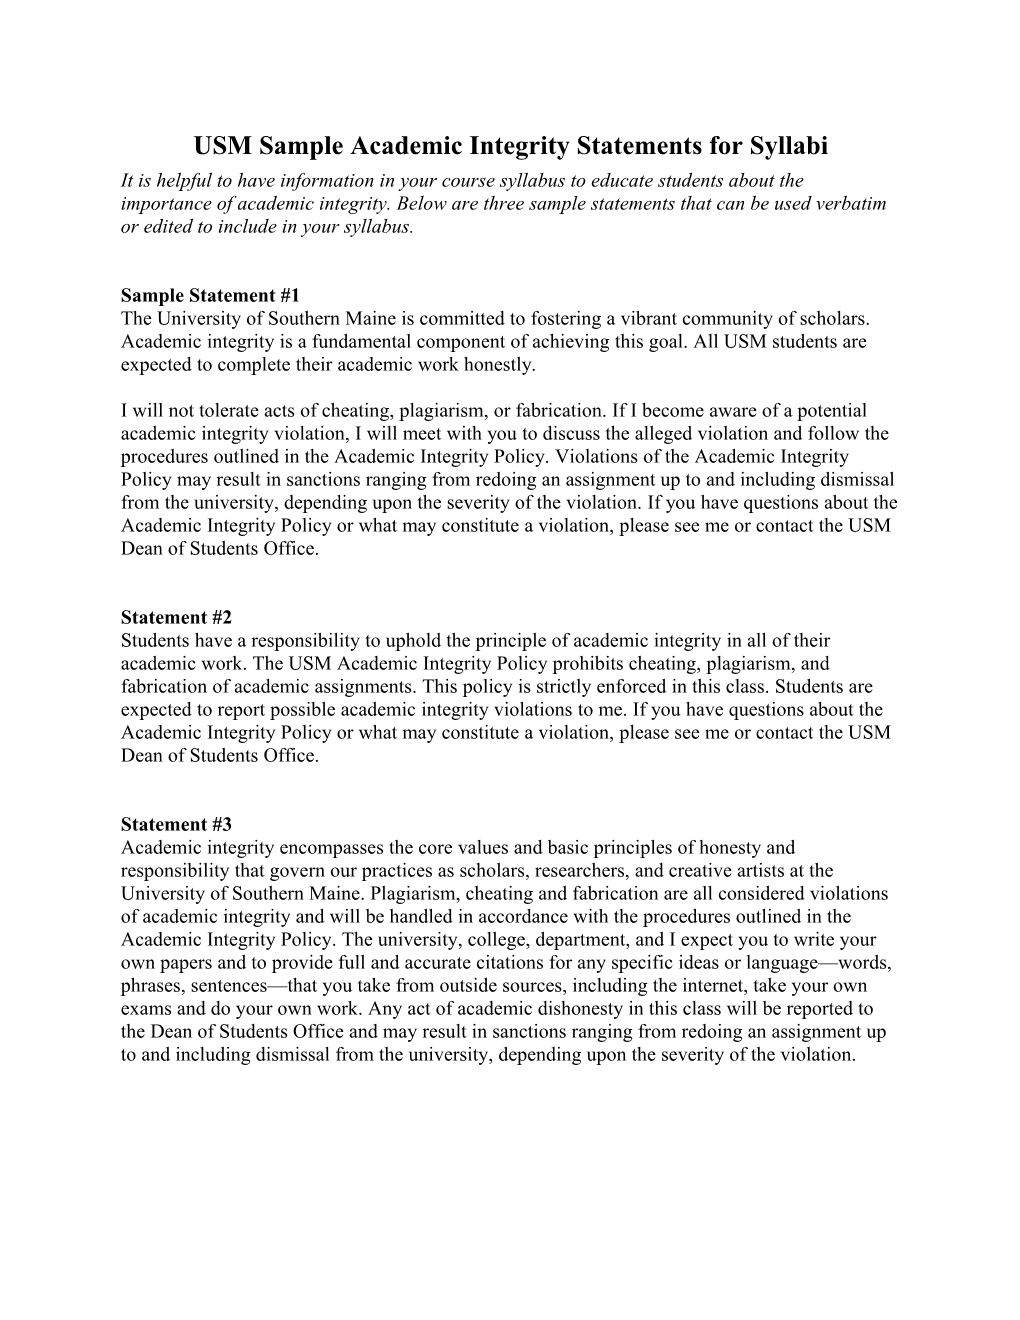 USM Sample Academic Integrity Statements for Syllabi